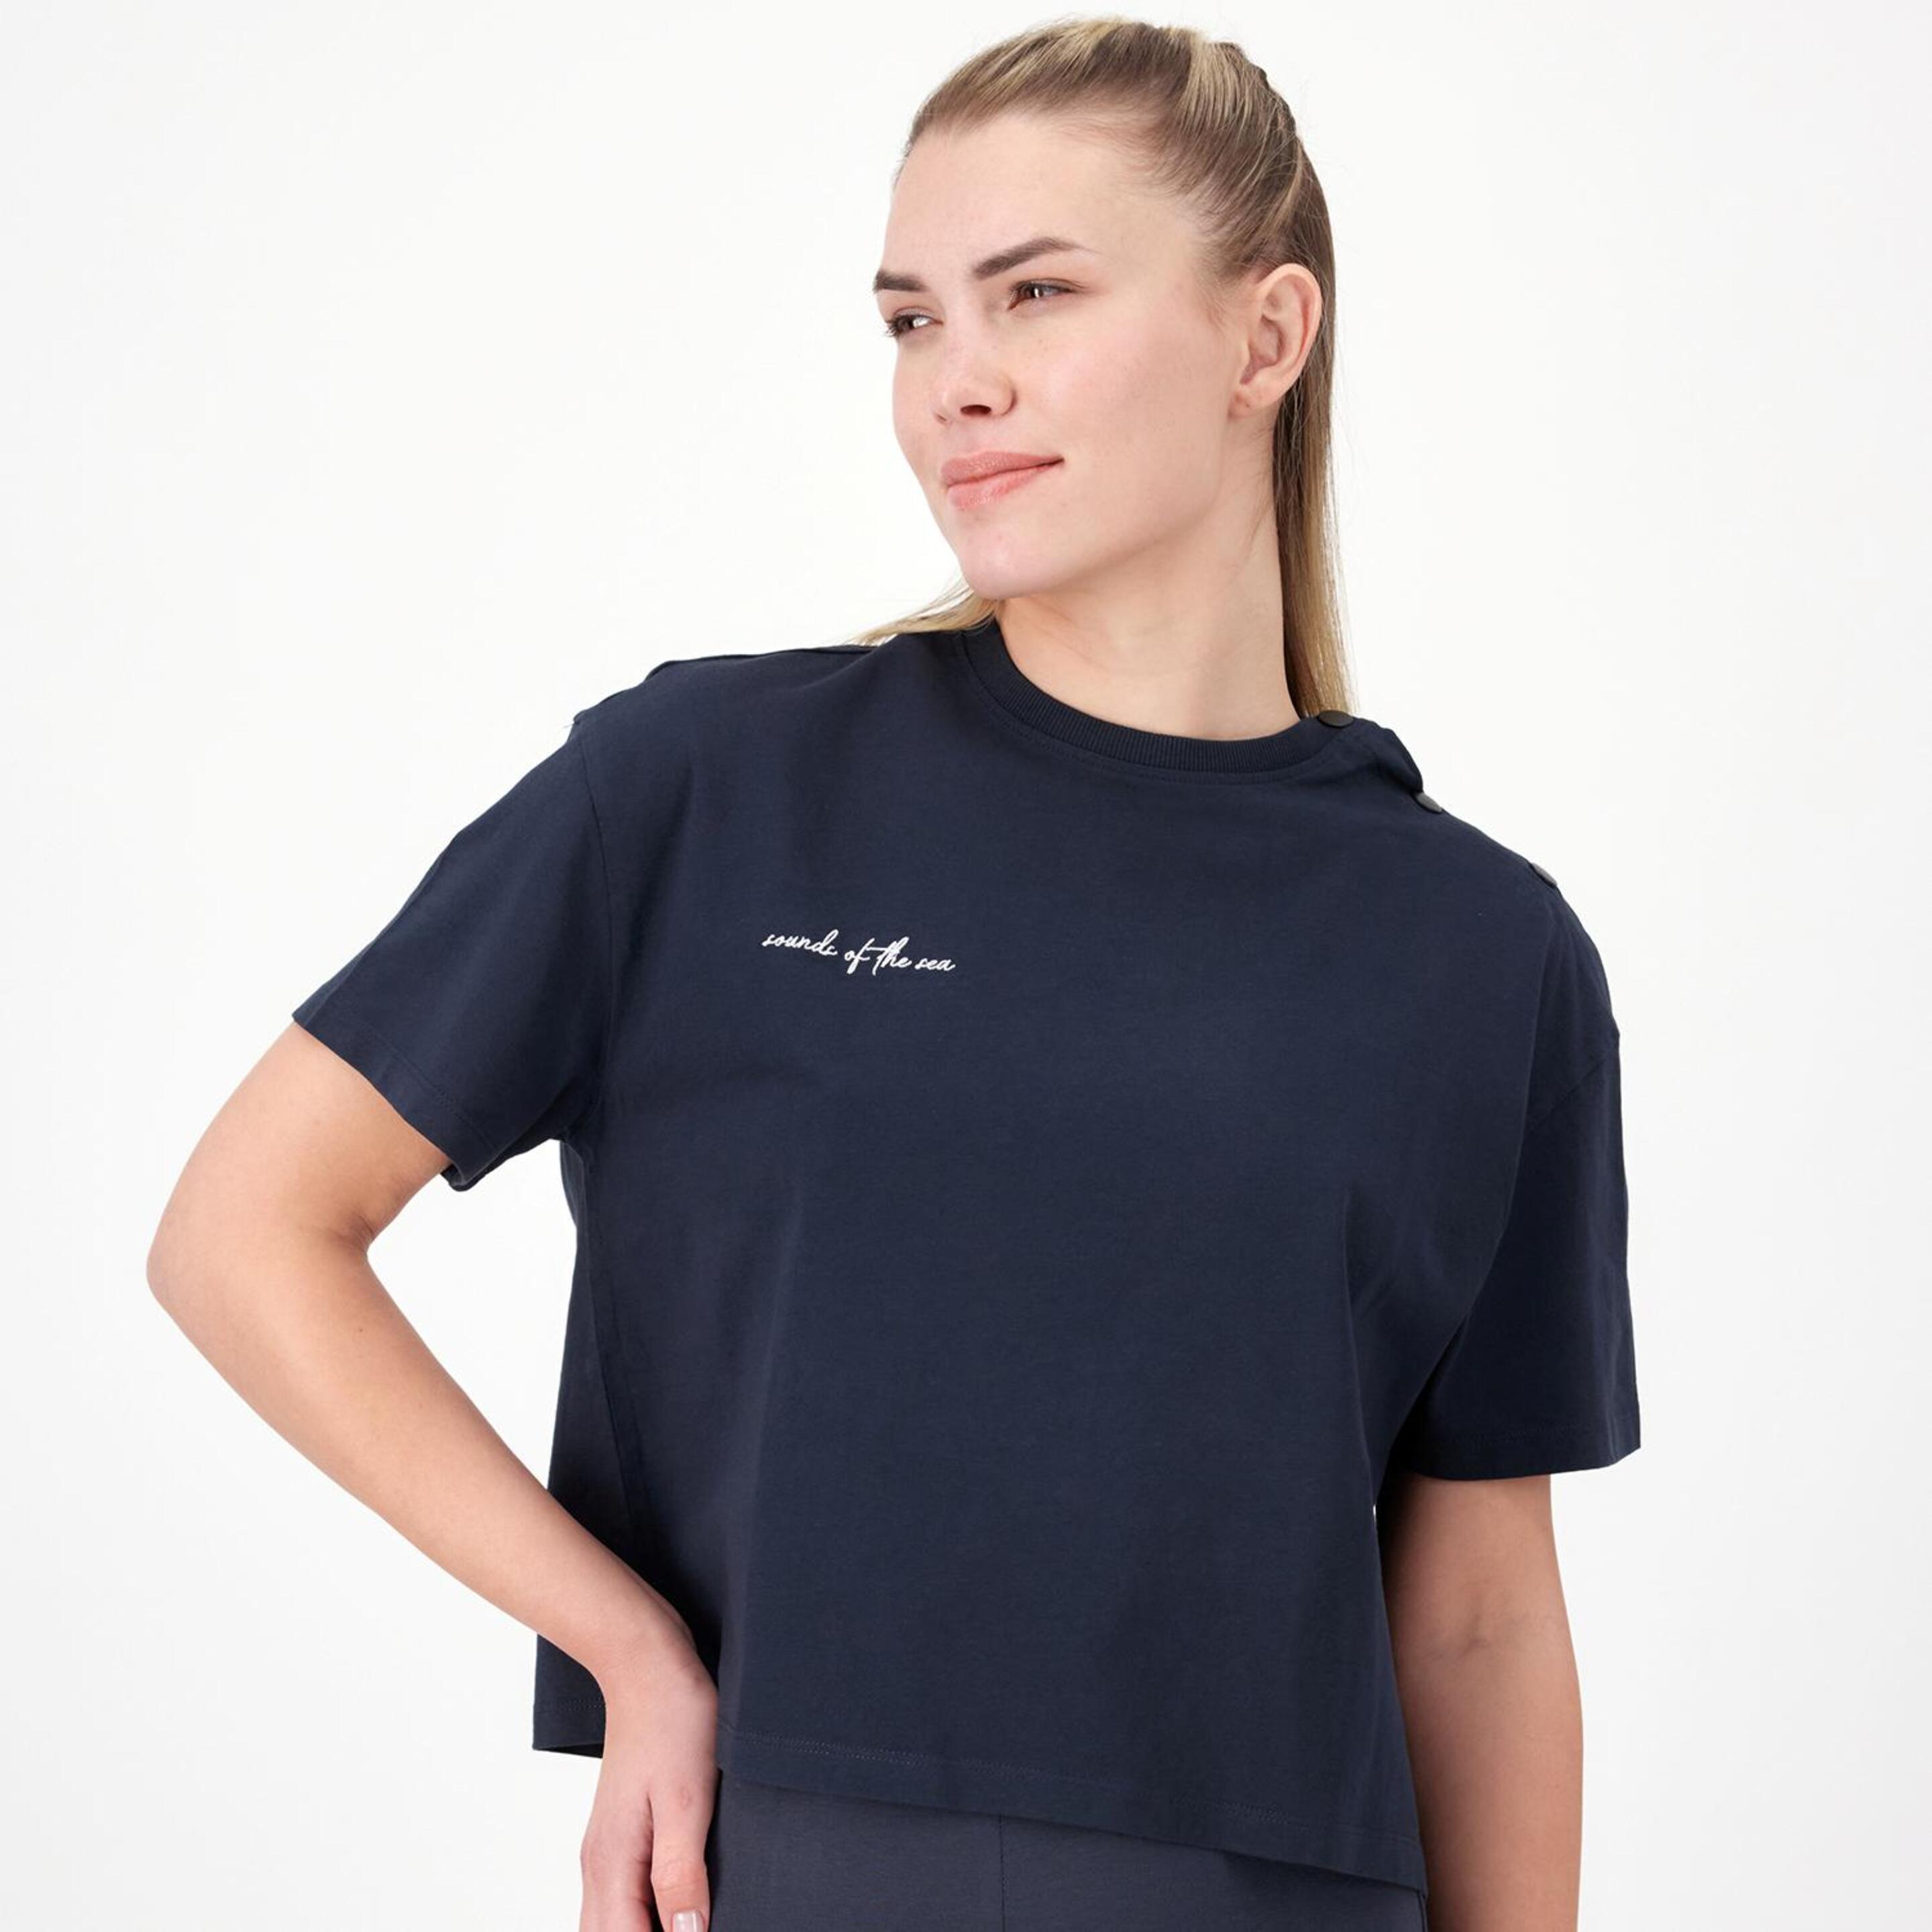 Silver Nautic 2 - azul - Camiseta Boxy Mujer